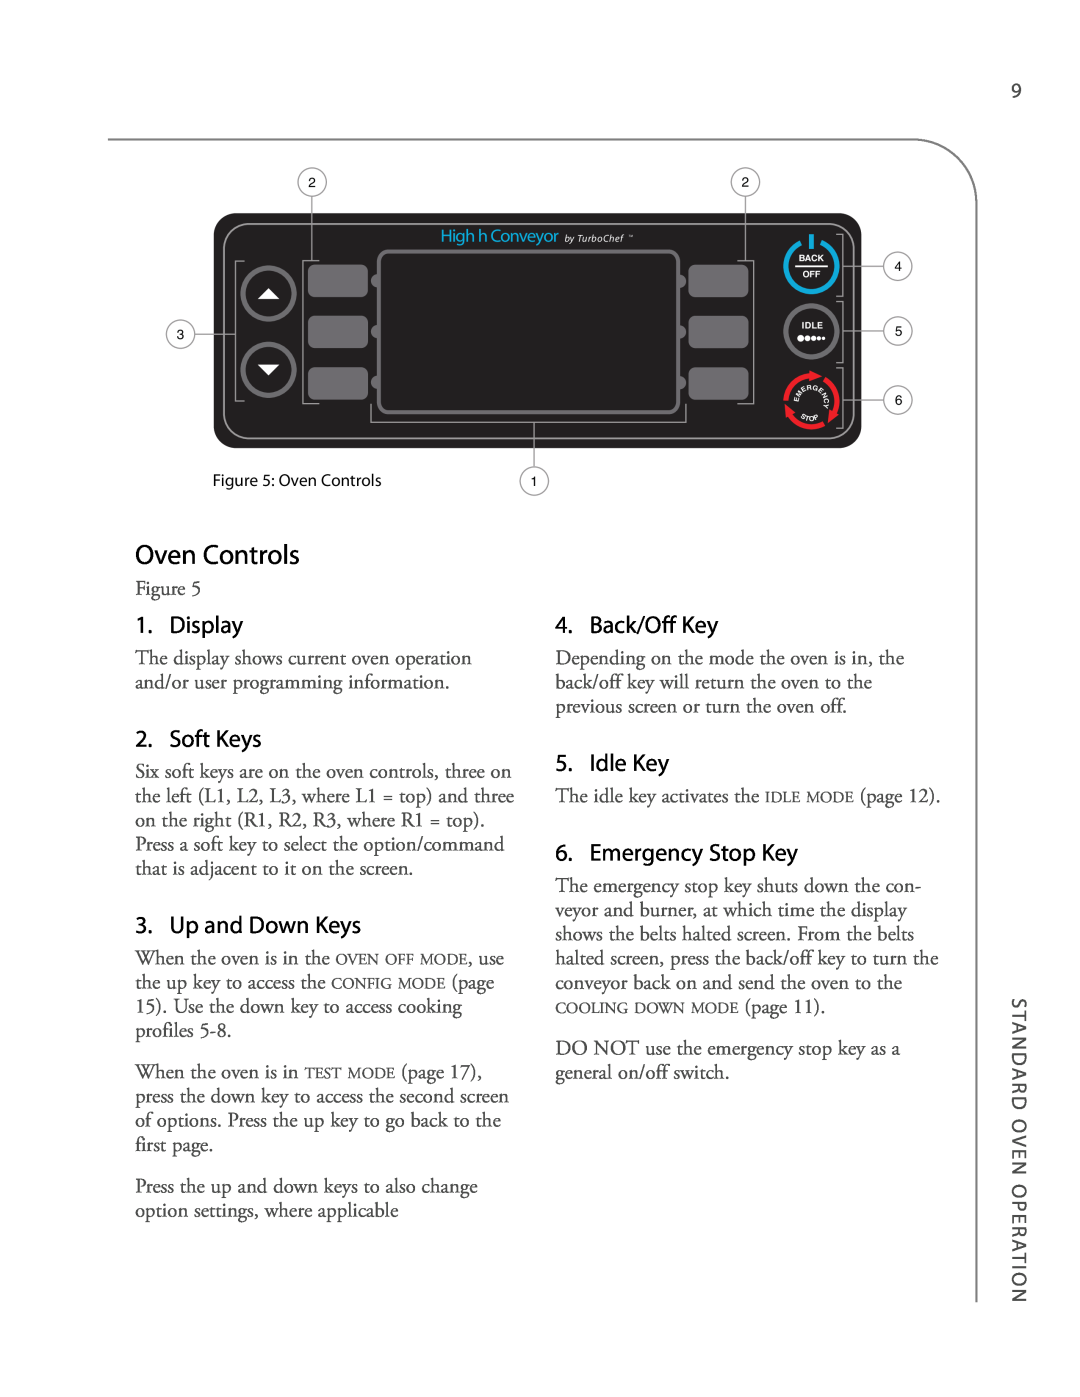 Turbo Chef Technologies 3240 manual Oven Controls, Display, Back/Off Key, Soft Keys, Up and Down Keys, Idle Key 